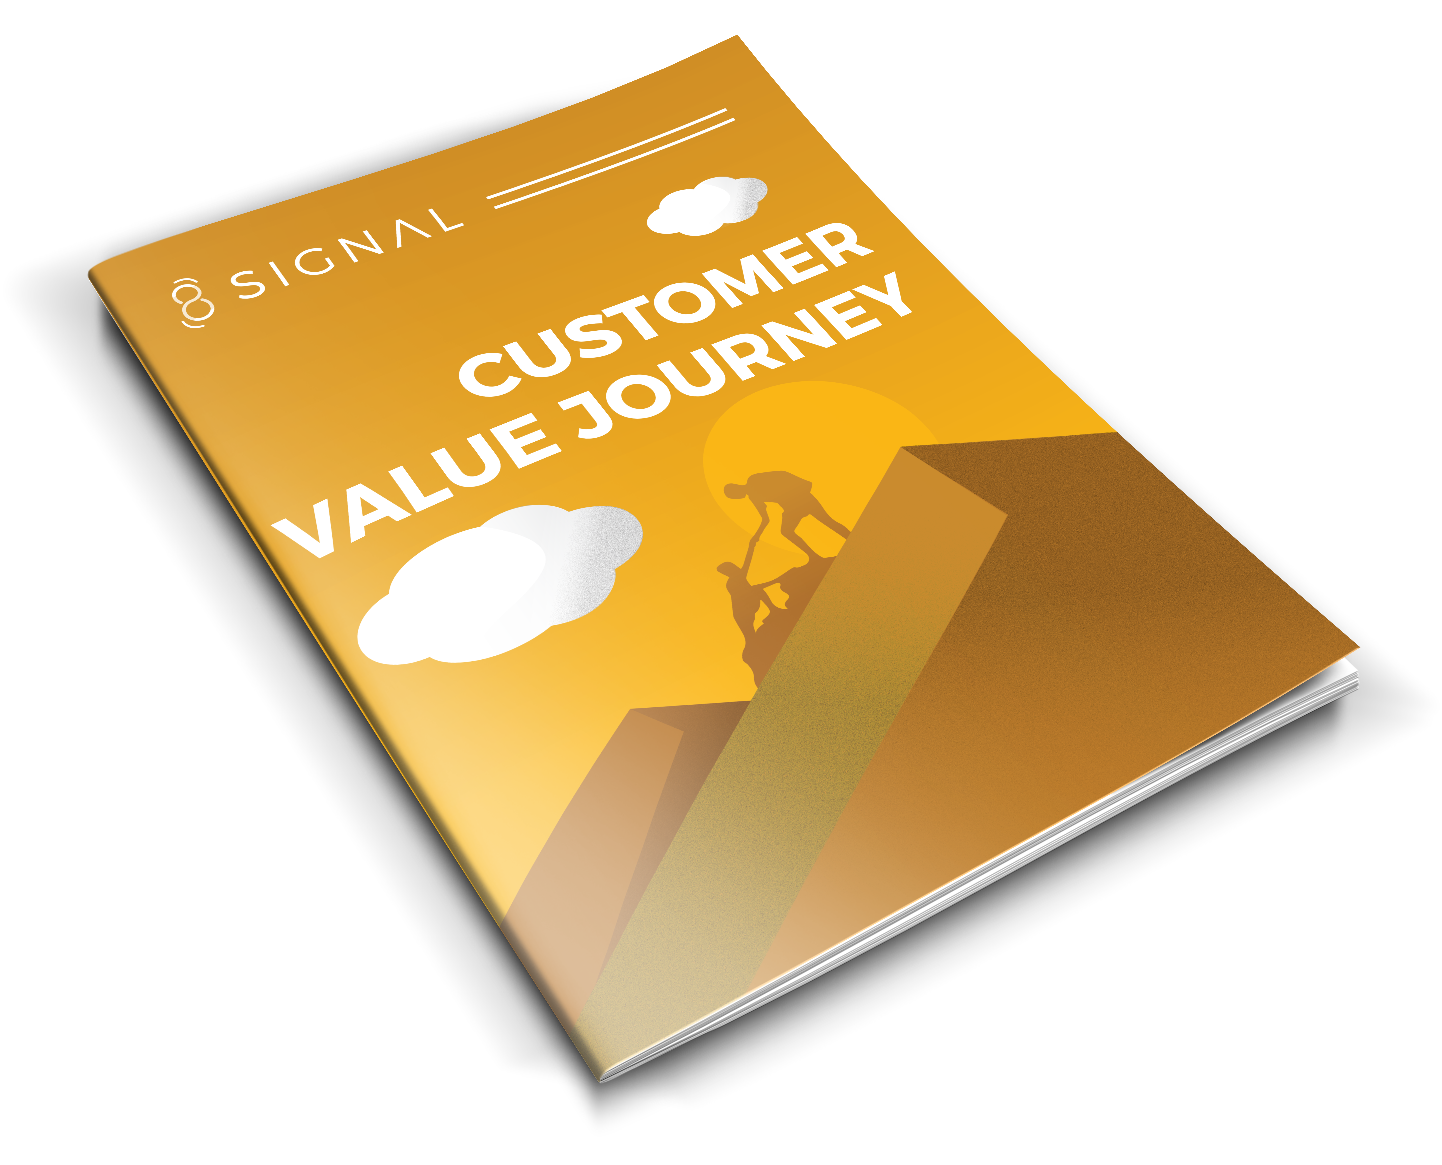 customer value journey